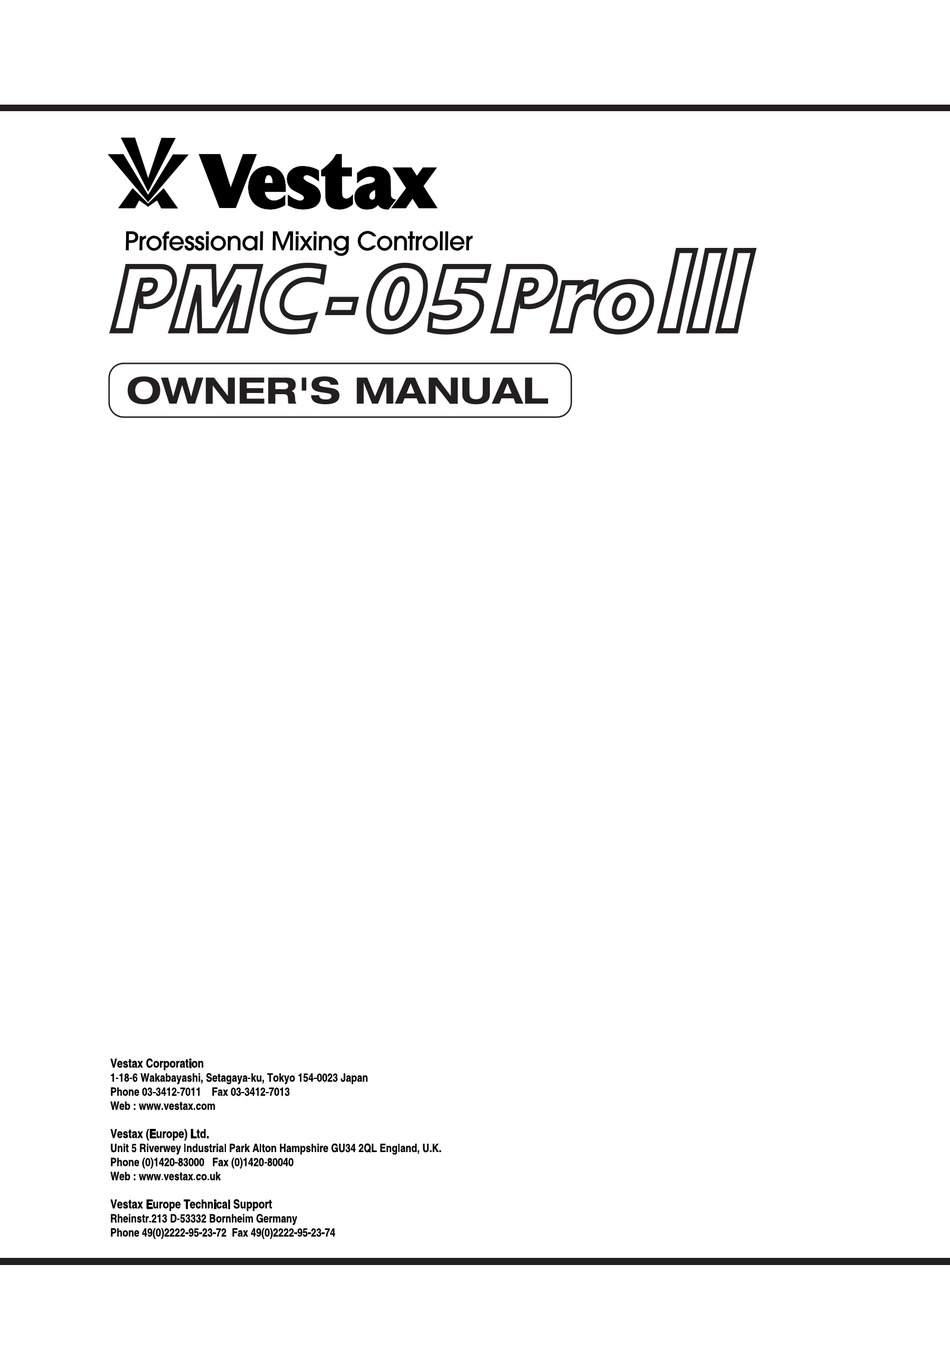 VESTAX PMC-05PROIII OWNER'S MANUAL Pdf Download | ManualsLib